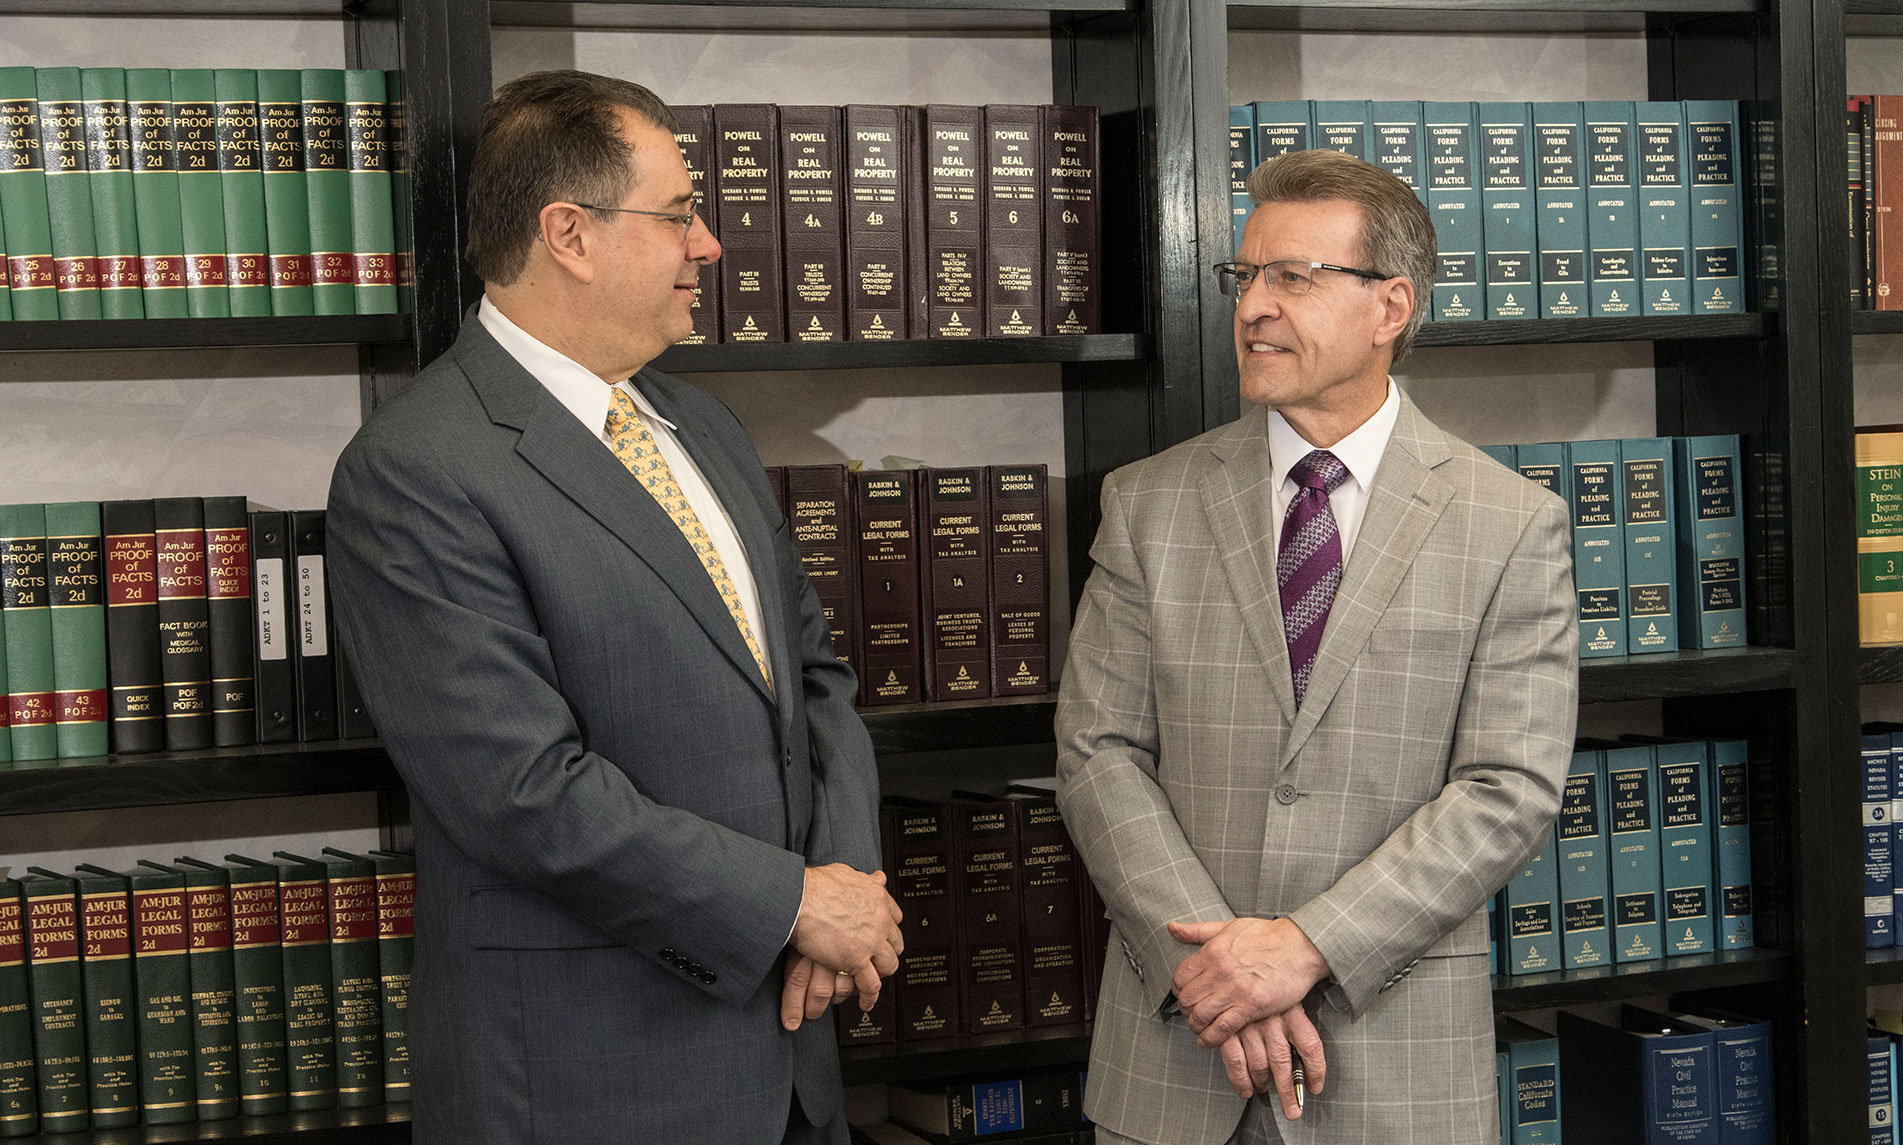 Founding Las Vegas Attorneys Allen Cap and Donald Kudler standing in an office